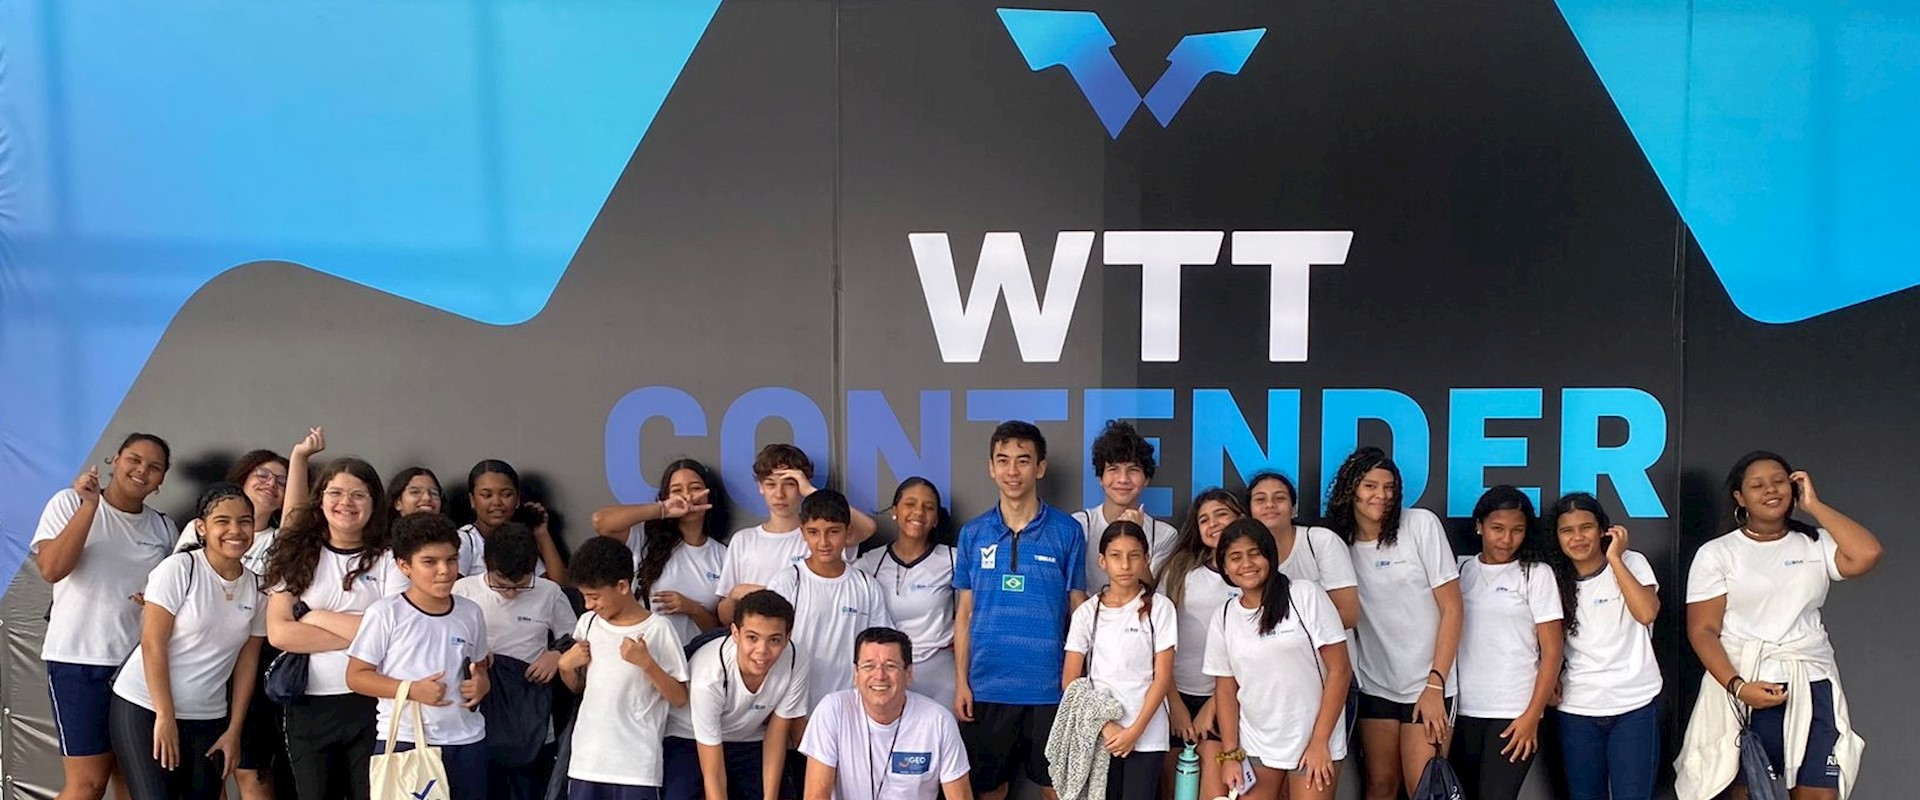 WTT Contender Rio proporciona vivência internacional para alunos de tênis de mesa